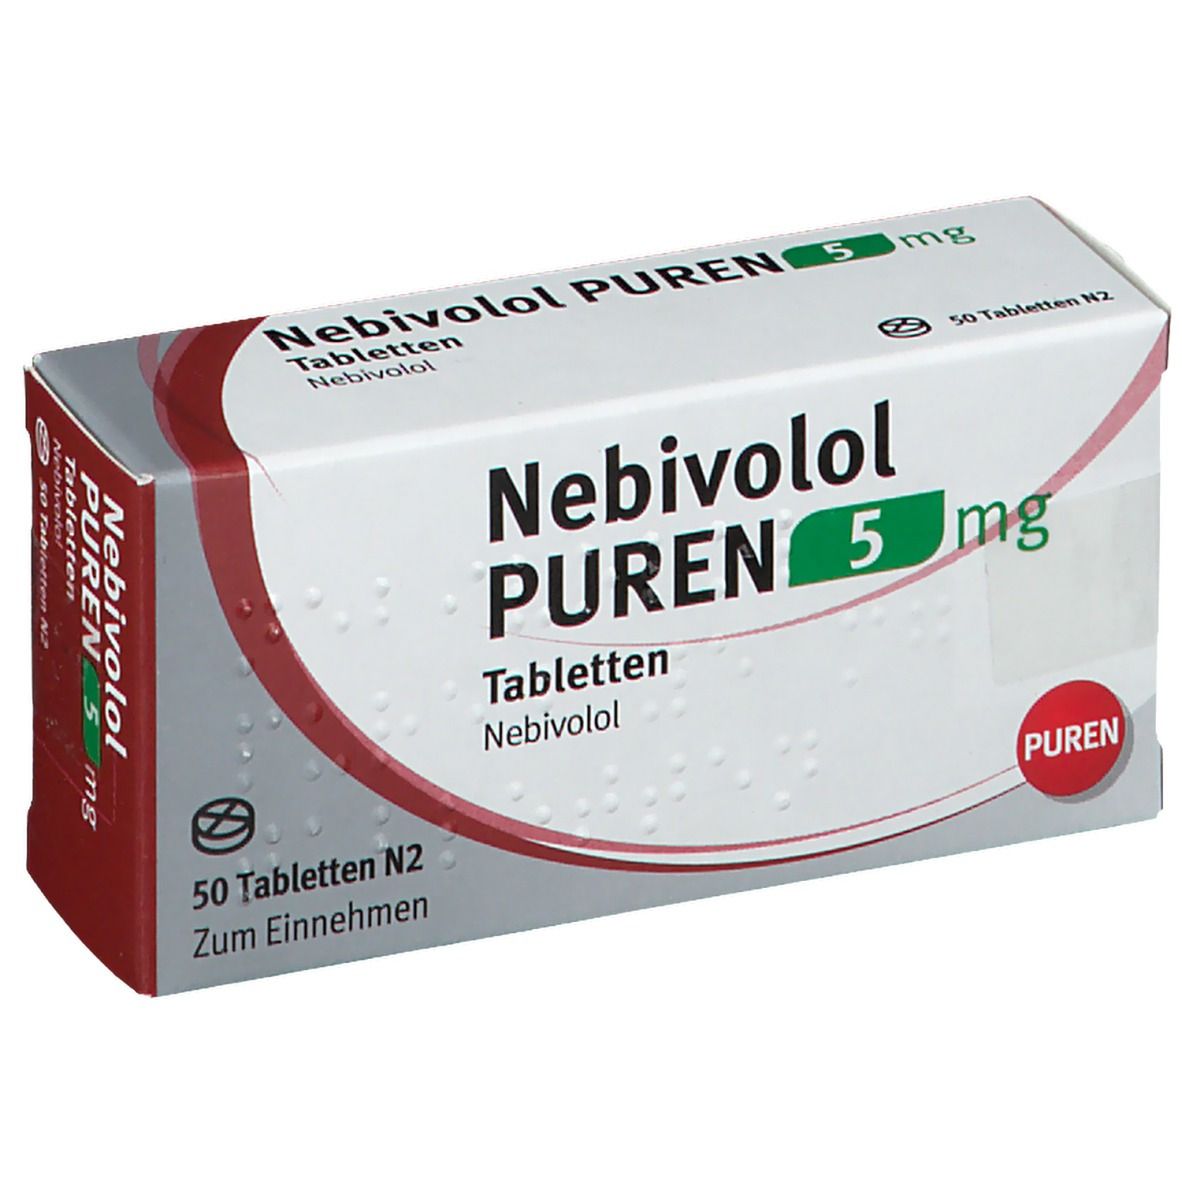 Nebivolol PUREN 5 mg